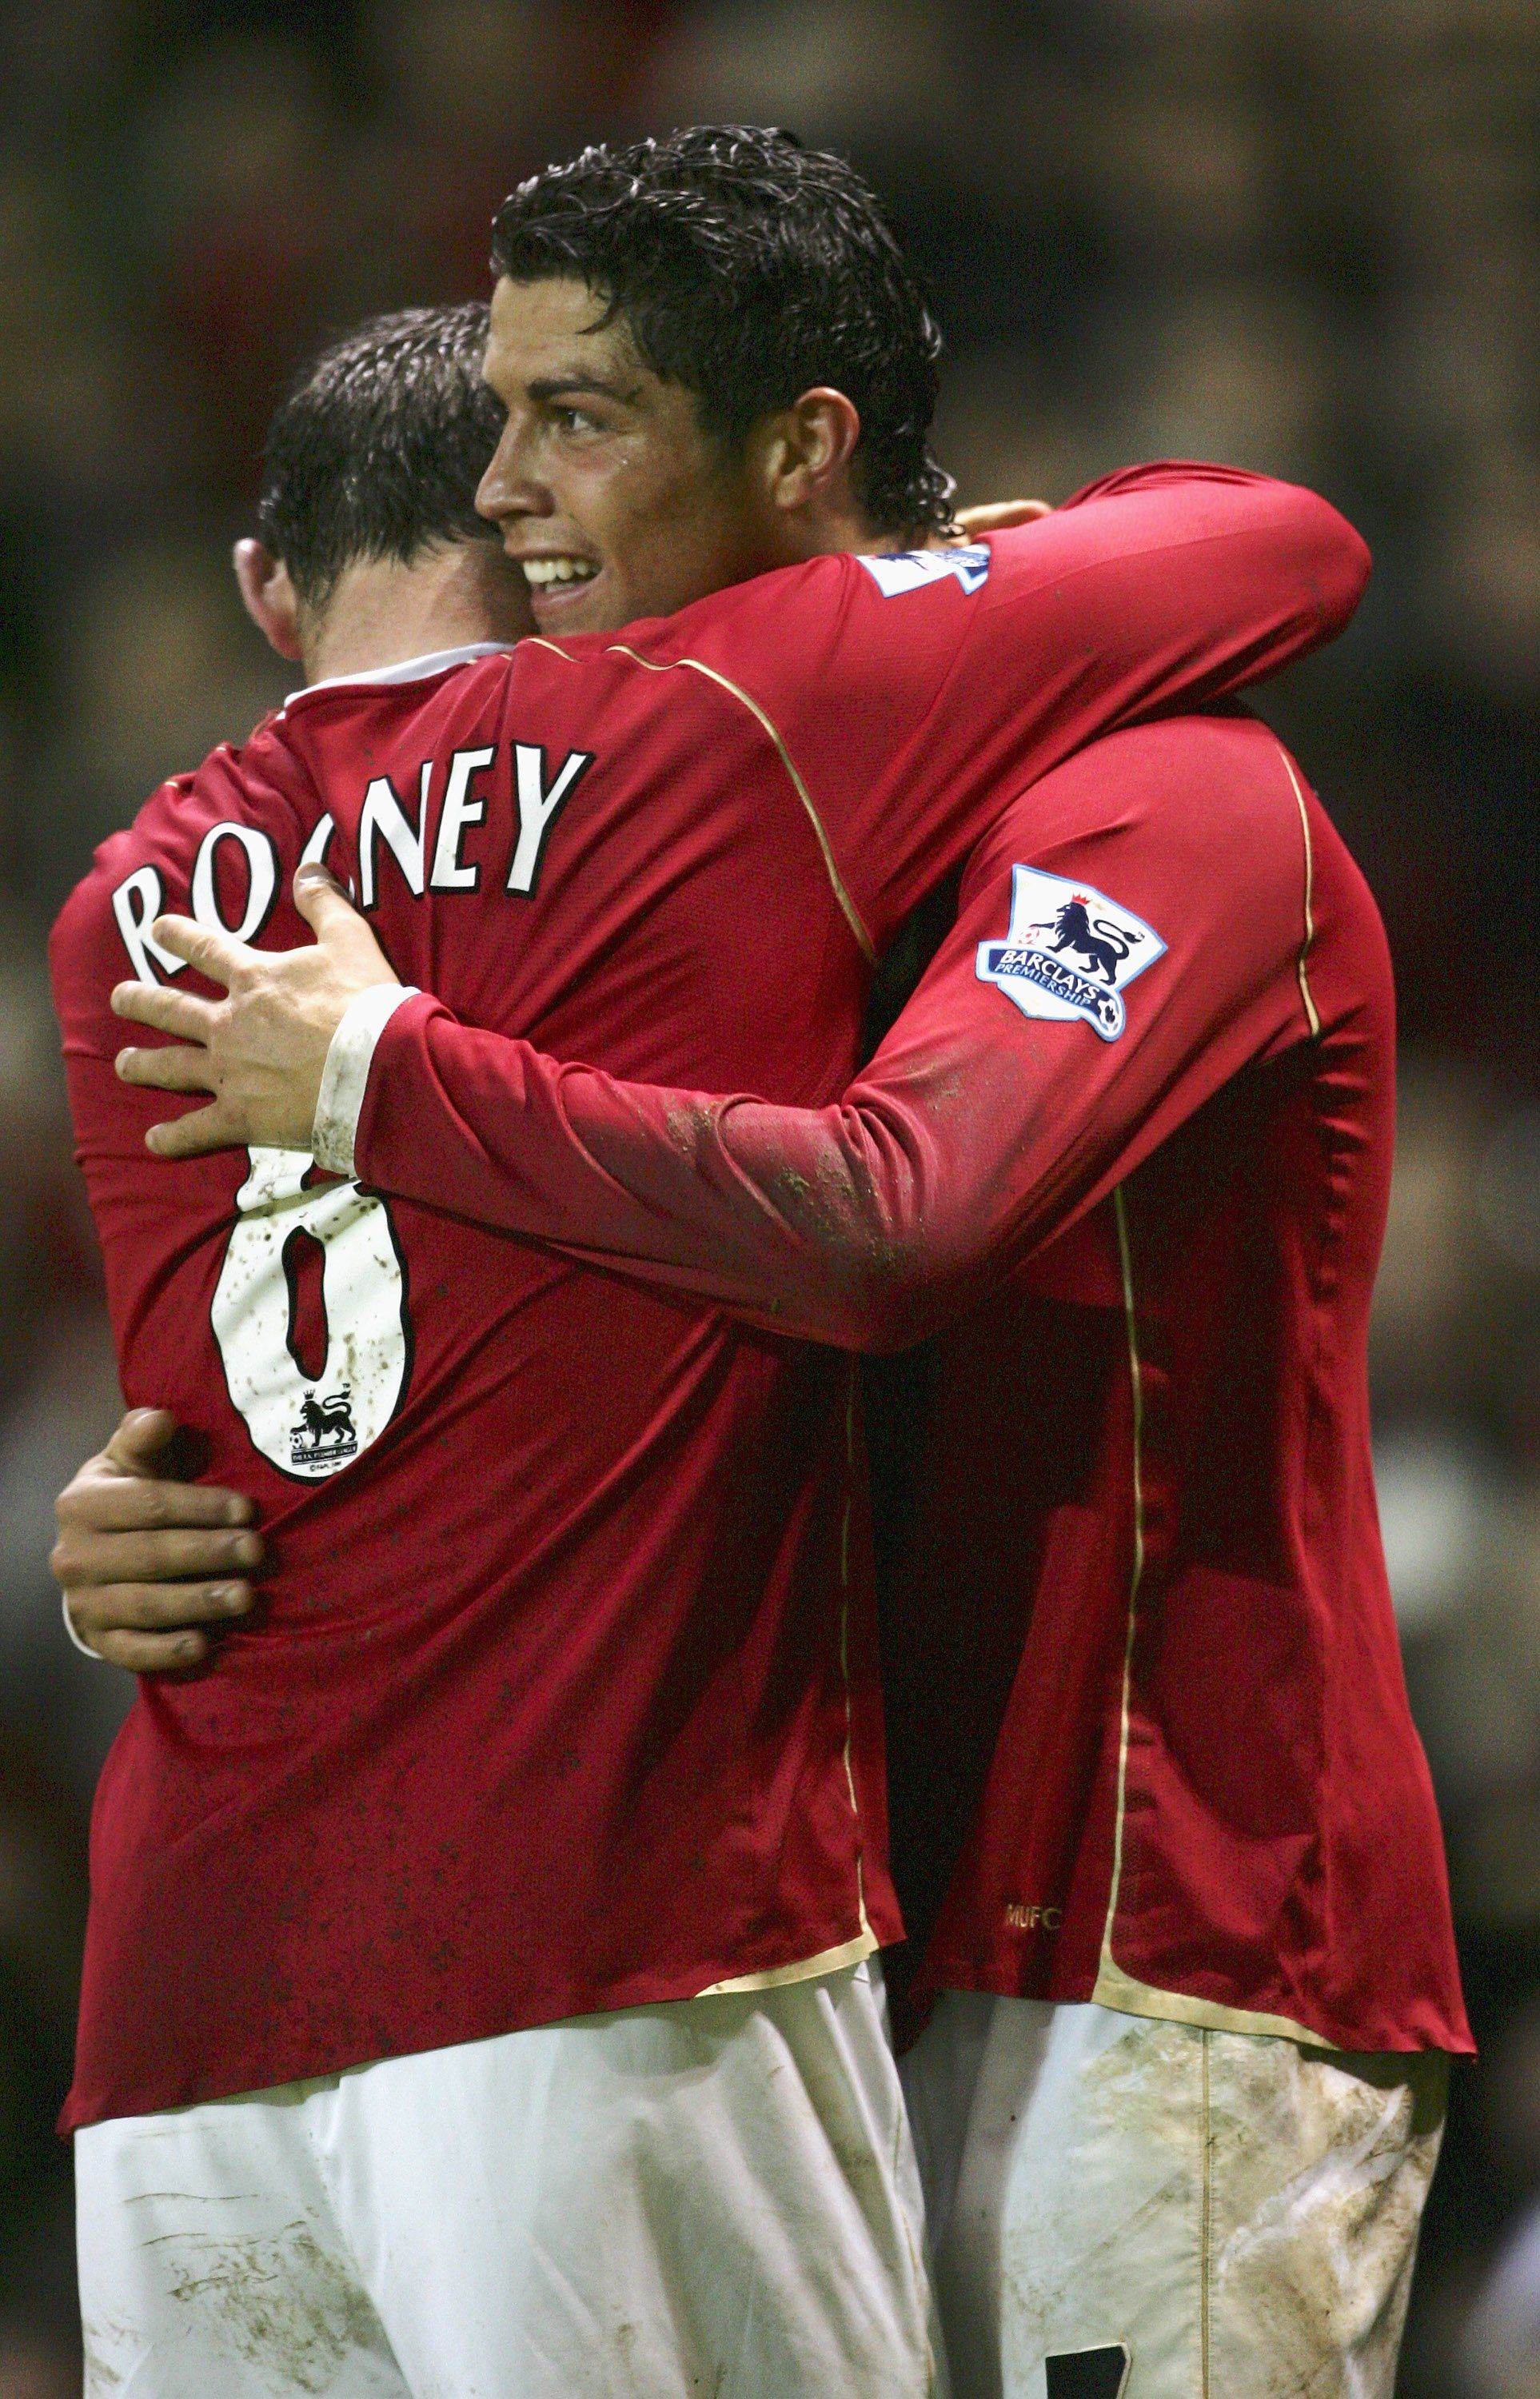 Rooney and Ronaldo at Man Utd celebrate.